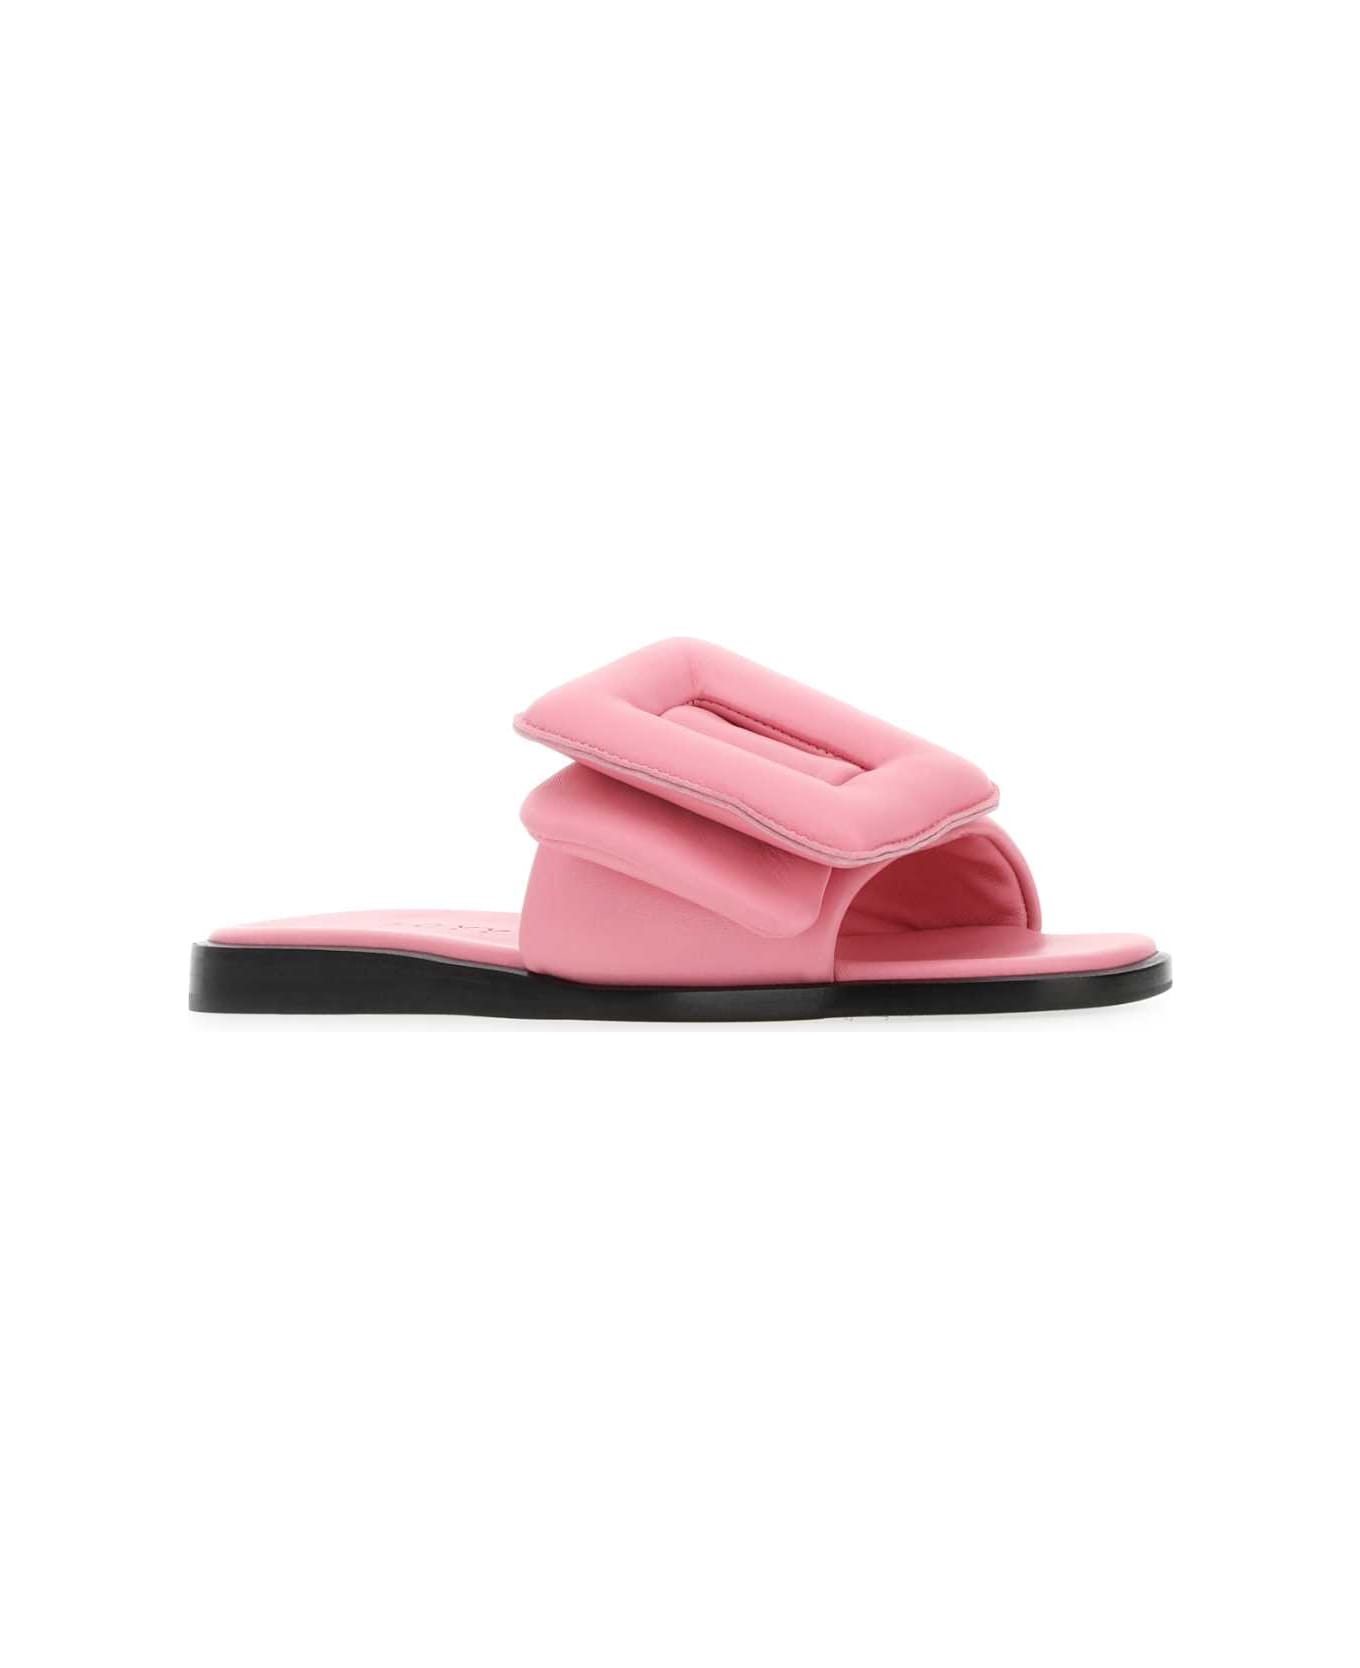 BOYY Pink Leather Puffy Slippers - BUBGUM サンダル